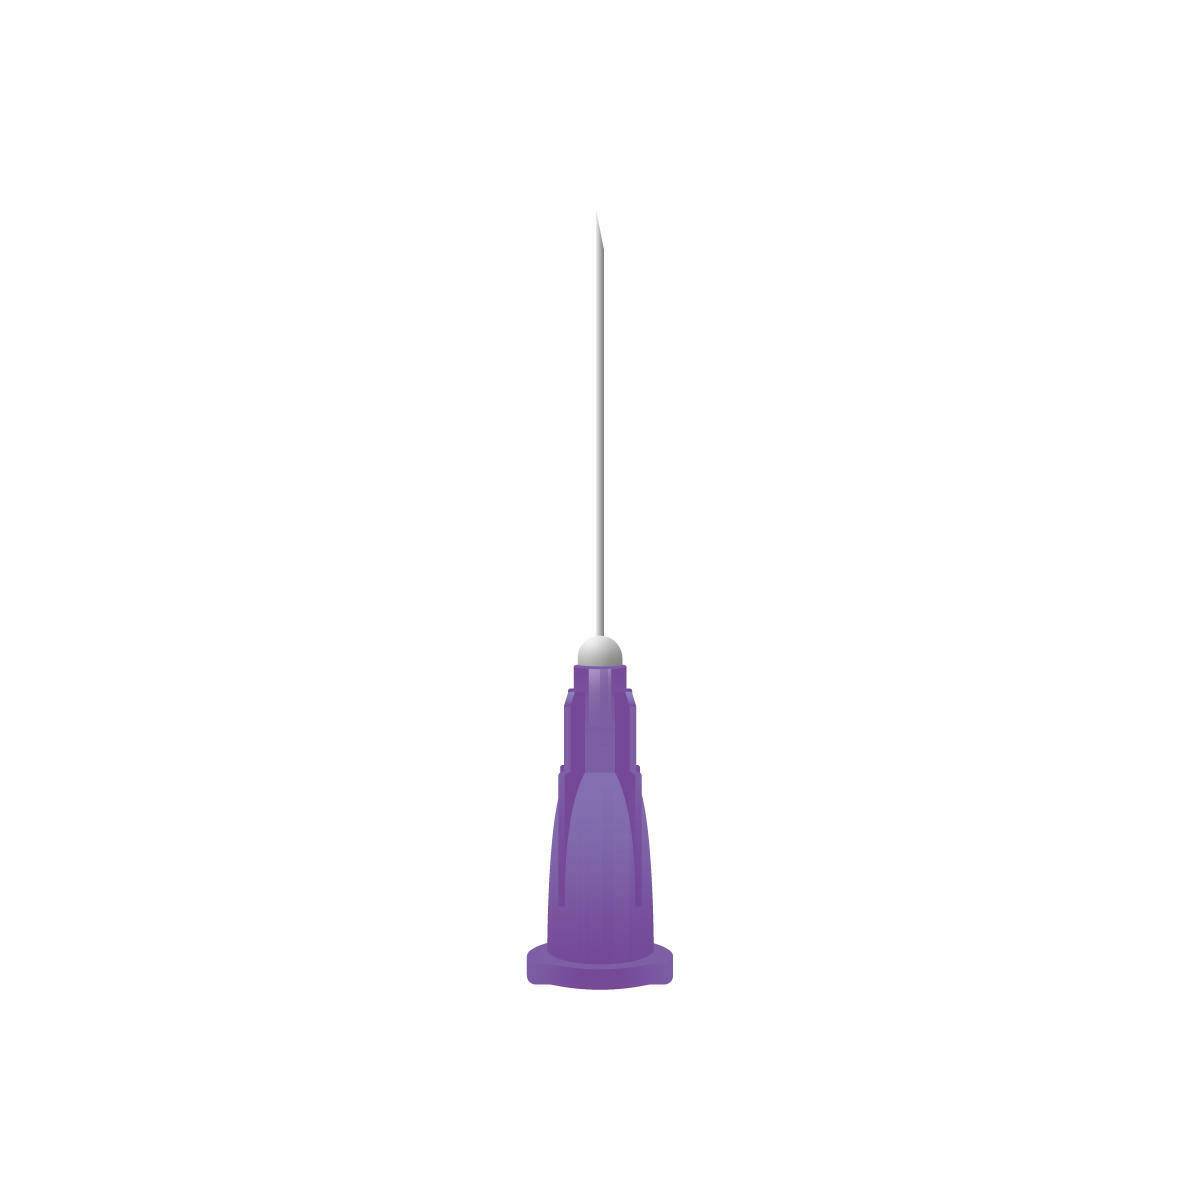 24g Purple 1 inch BD Microlance Needles (25mm x 0.55mm)